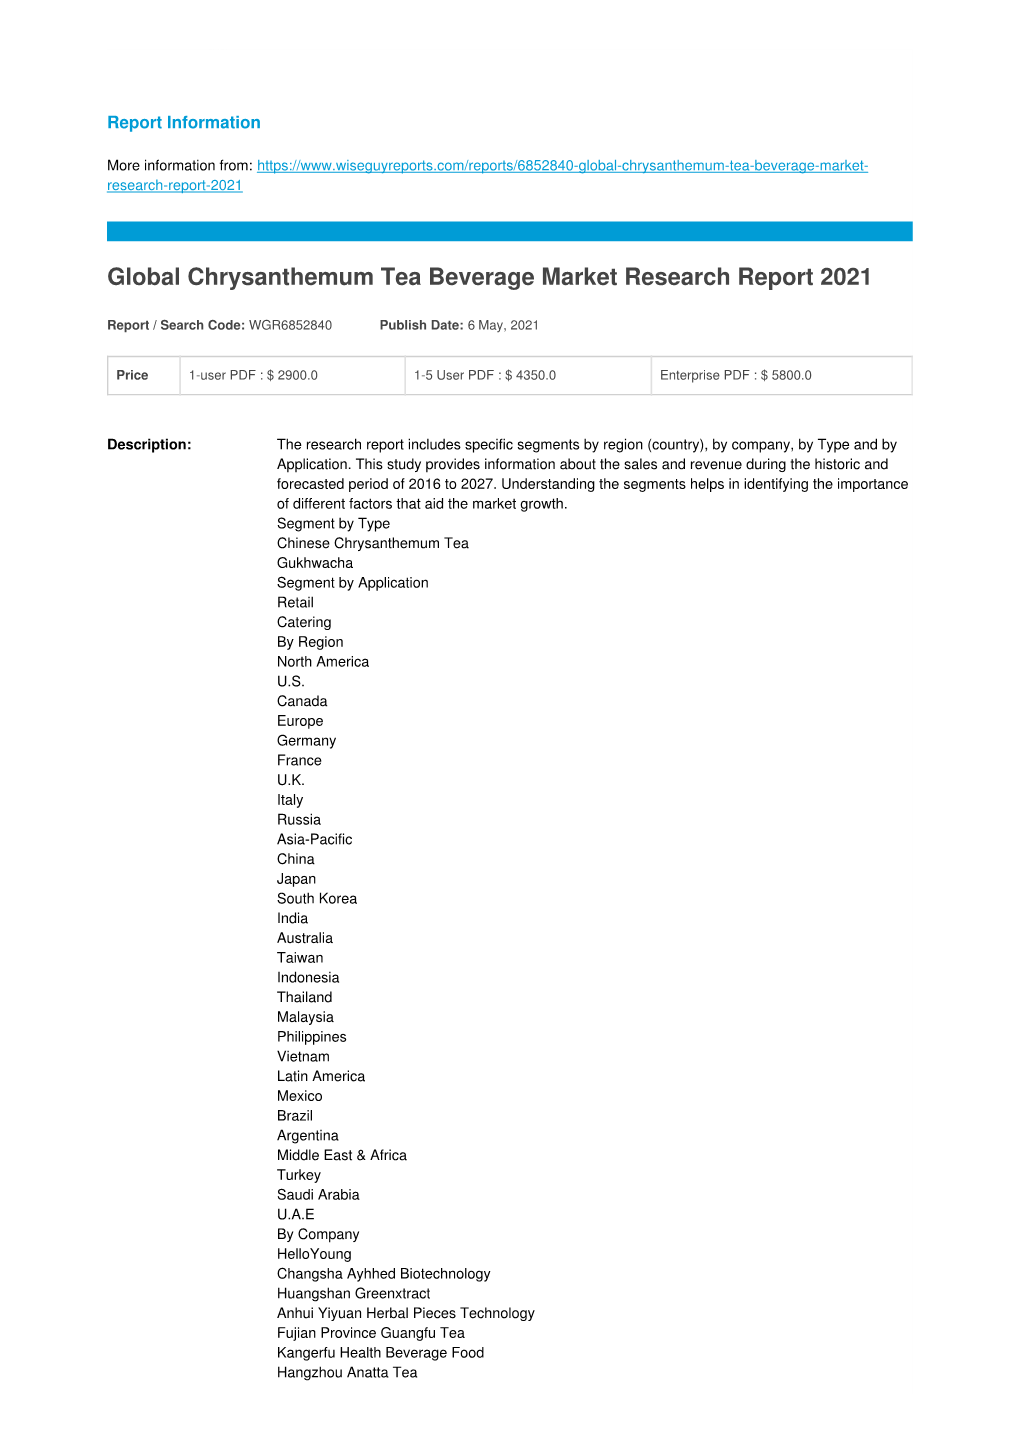 Global Chrysanthemum Tea Beverage Market Research Report 2021